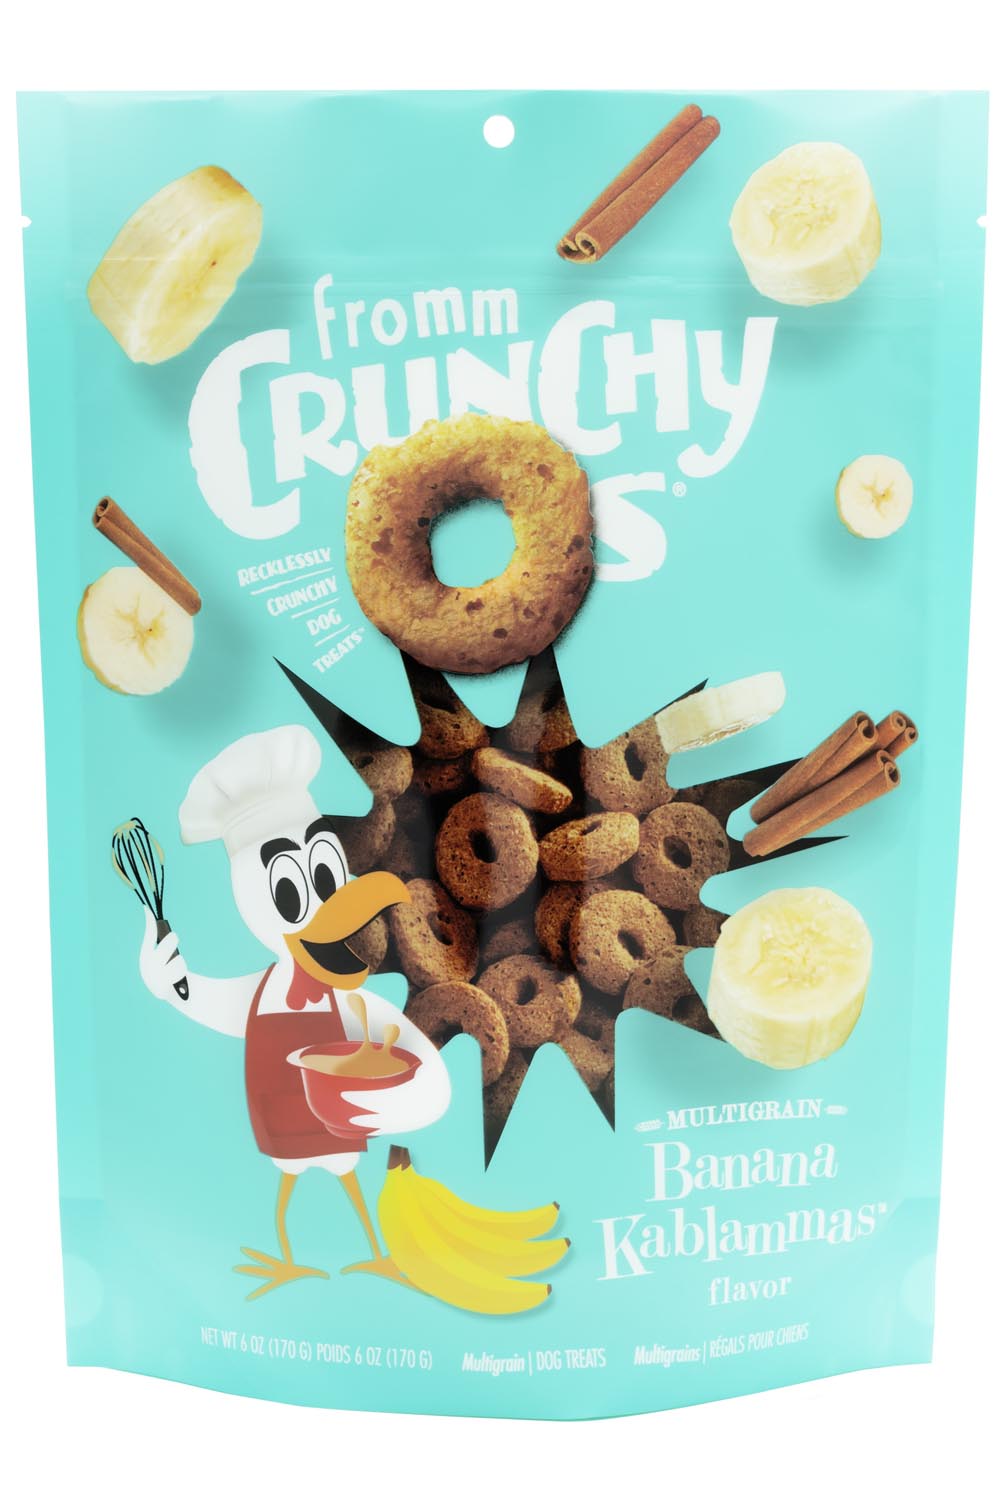 Fromm Crunchy O's Banana Kablammas, 6 oz.